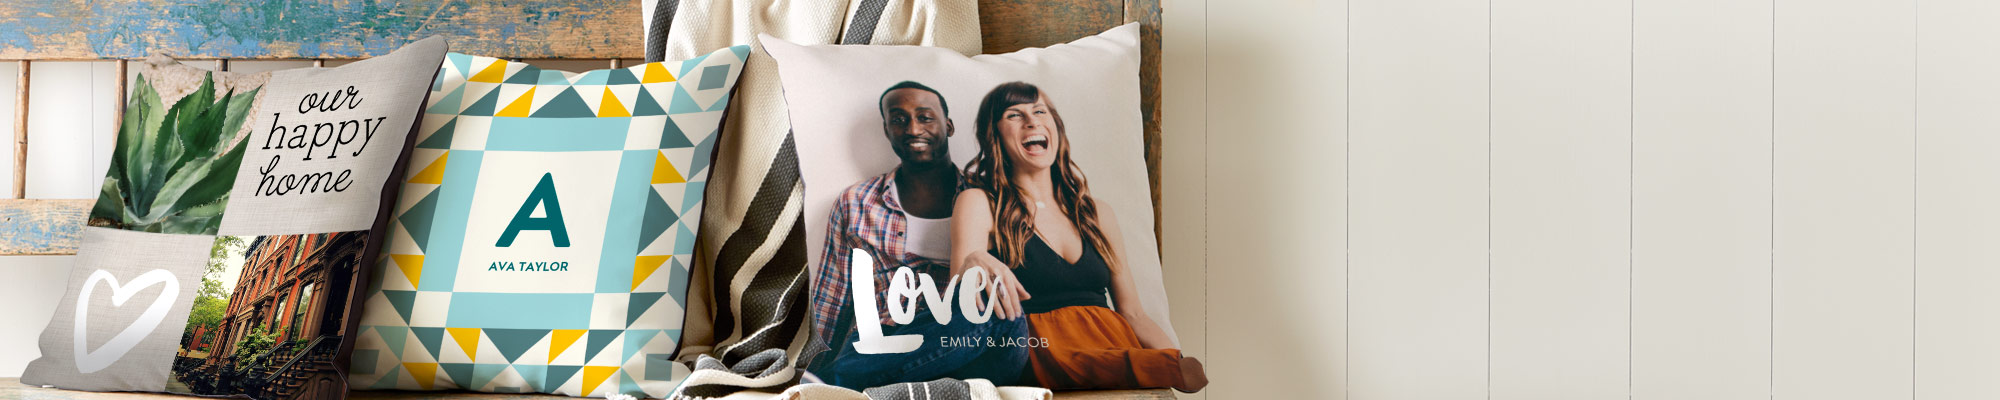 personalized pillows uk